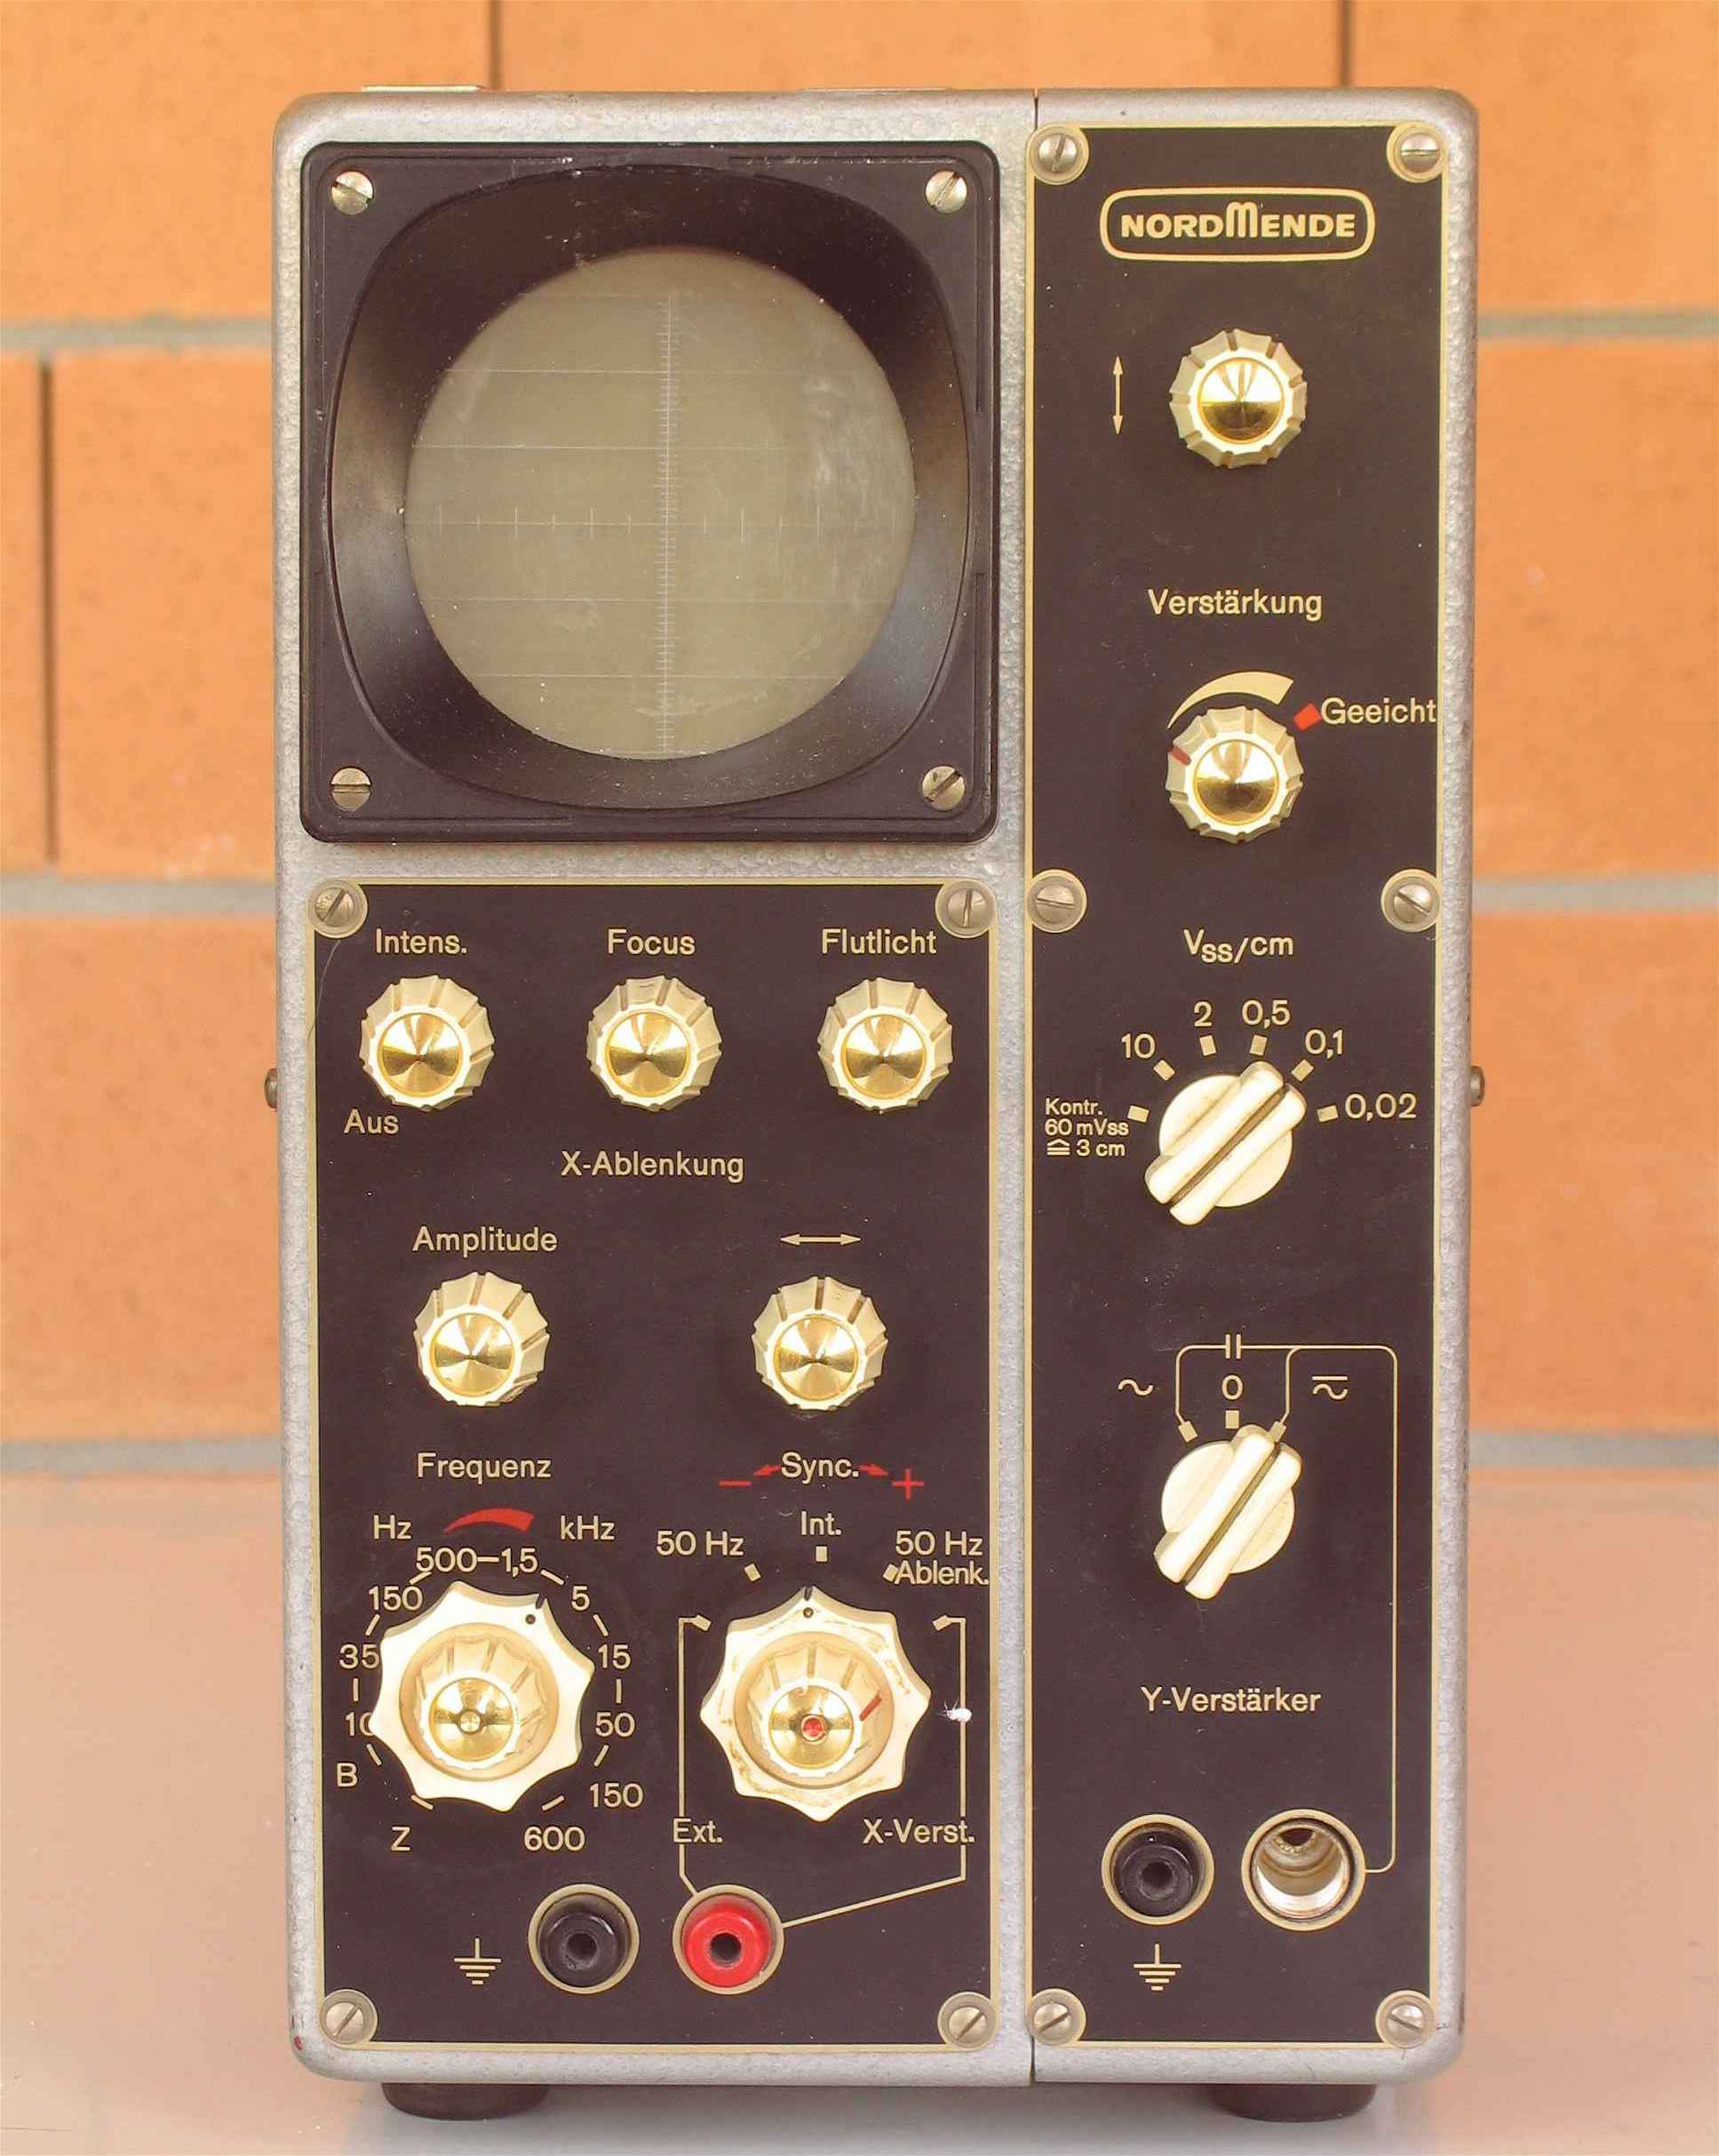 Oscilloscope à tube cathodique
(NordMende UO 963)